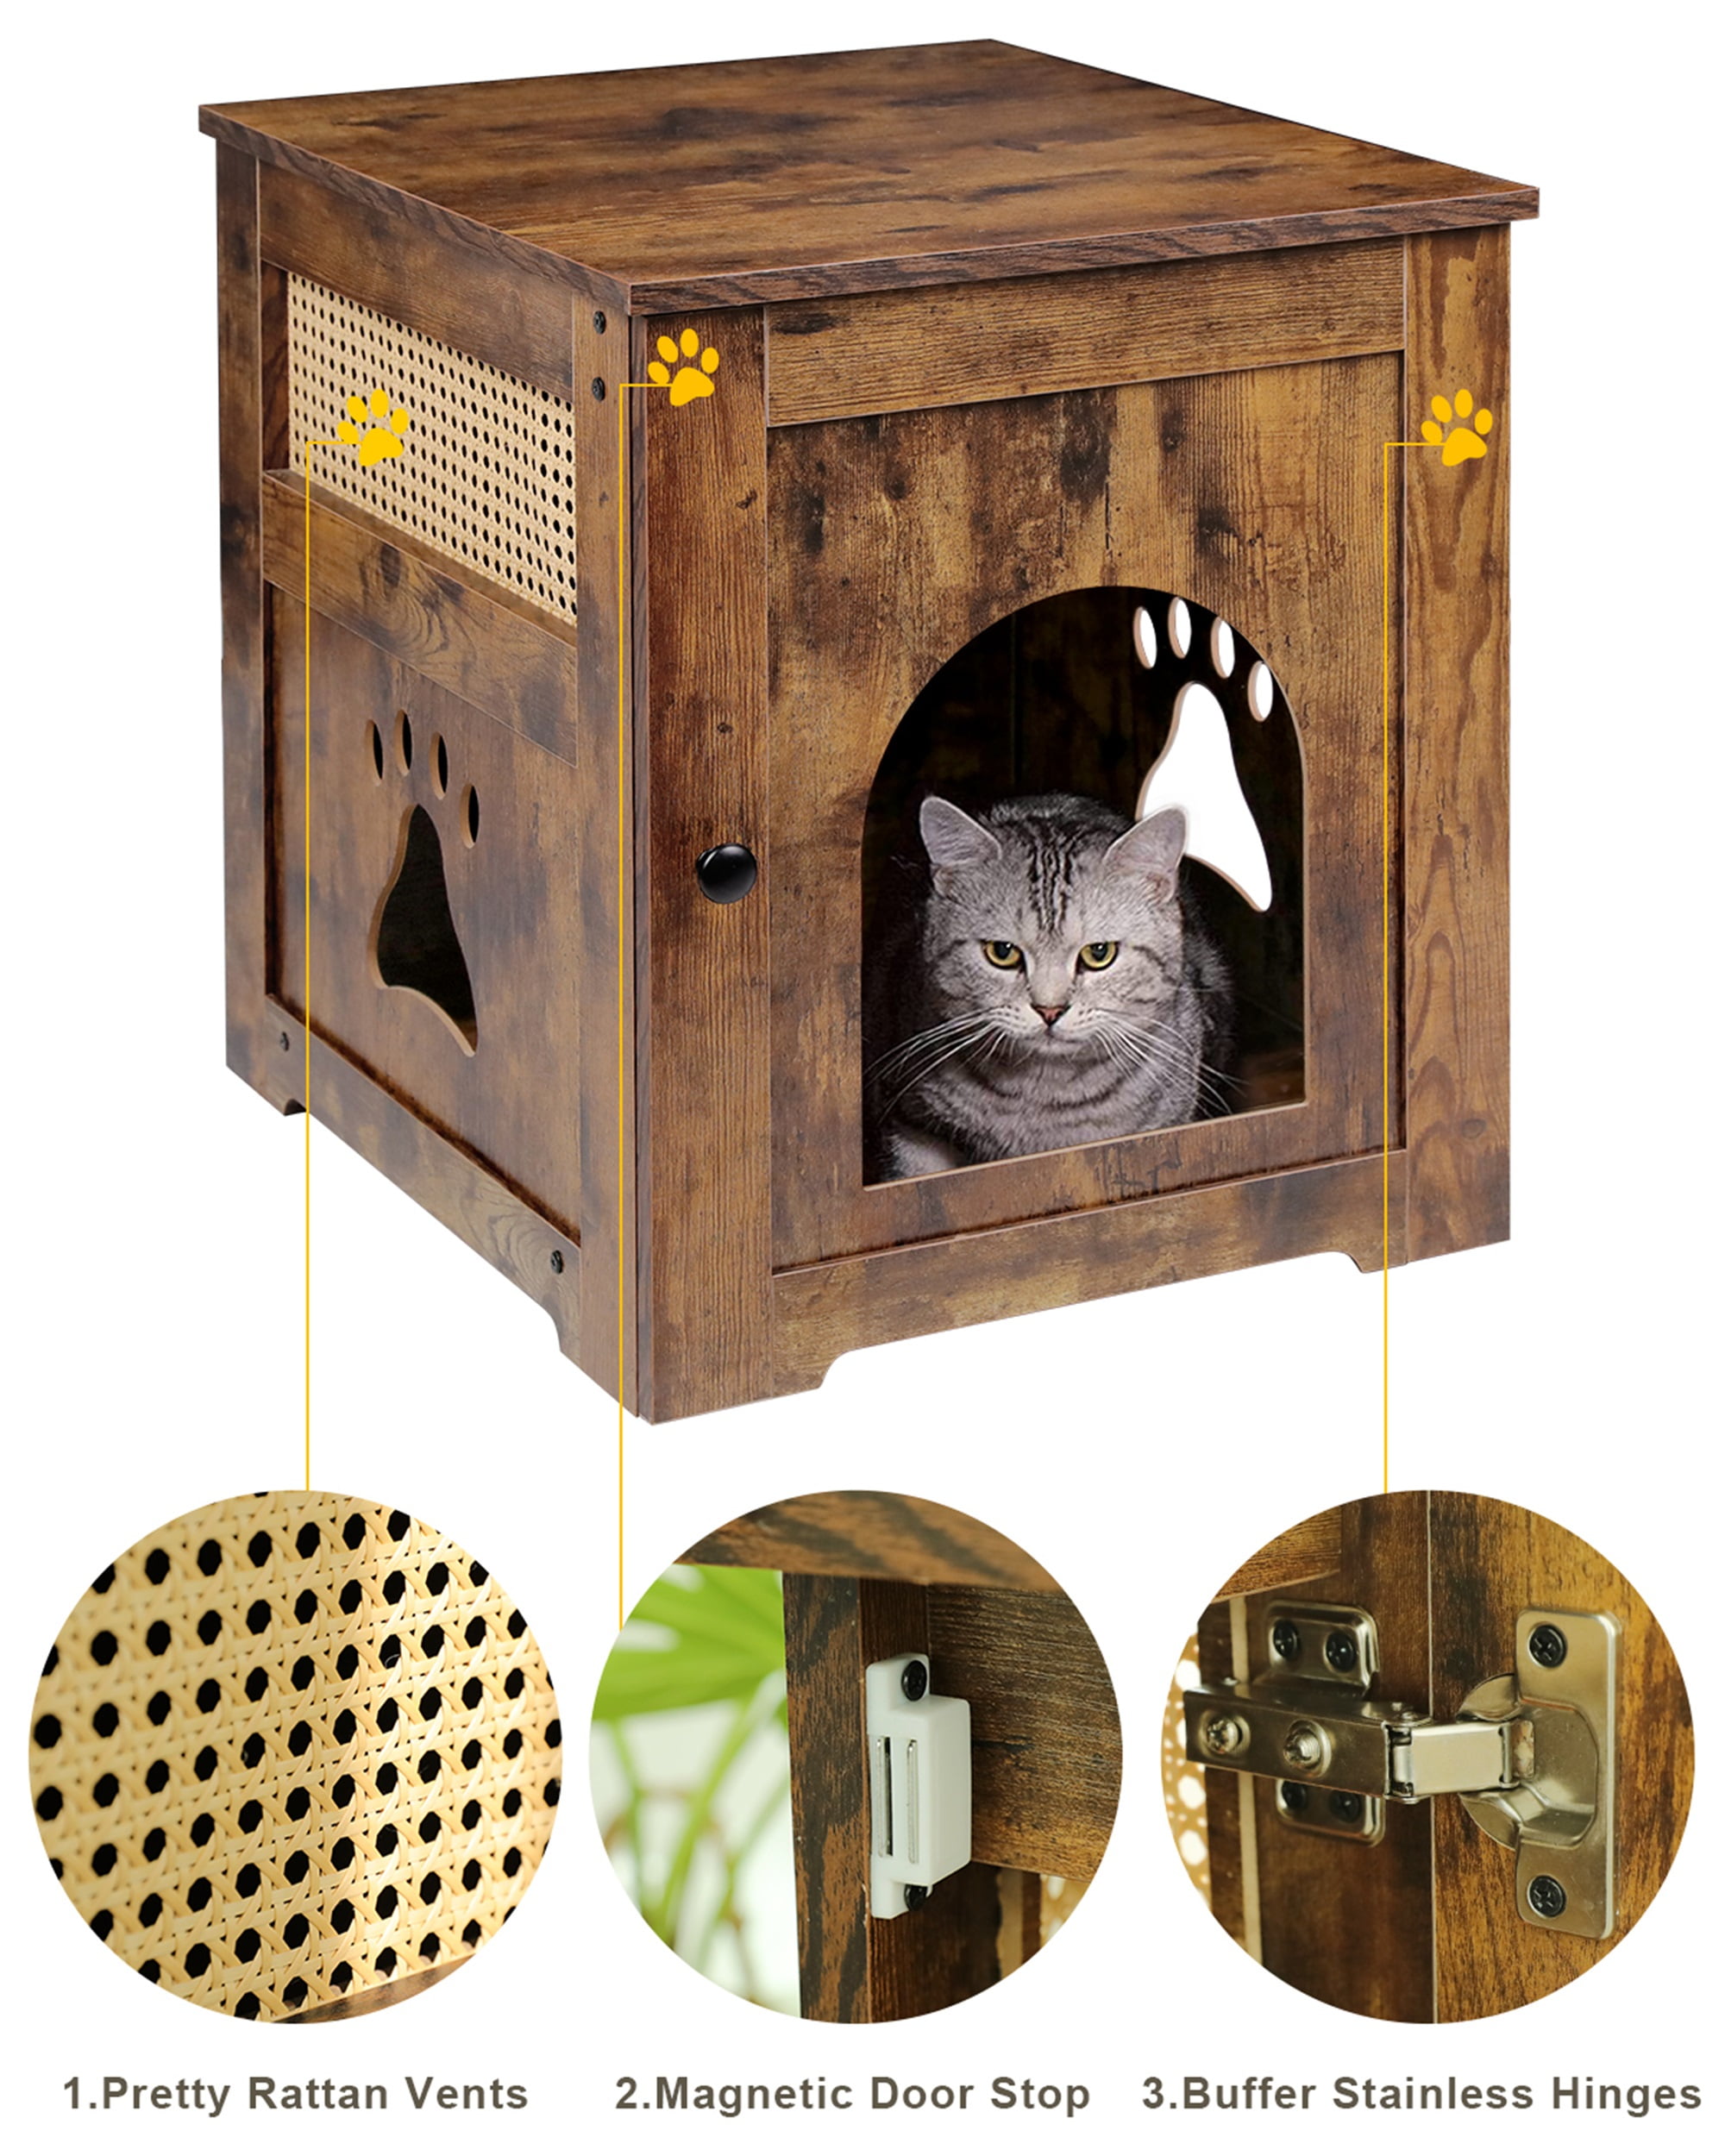  beeNbkks Cat Litter Box Furniture, Cat Washroom Hidden Litter  Box Enclosure, Wooden Cat House Nightstand End Table, Indoor Cat Furniture  Cabinet Pet Crate : Pet Supplies